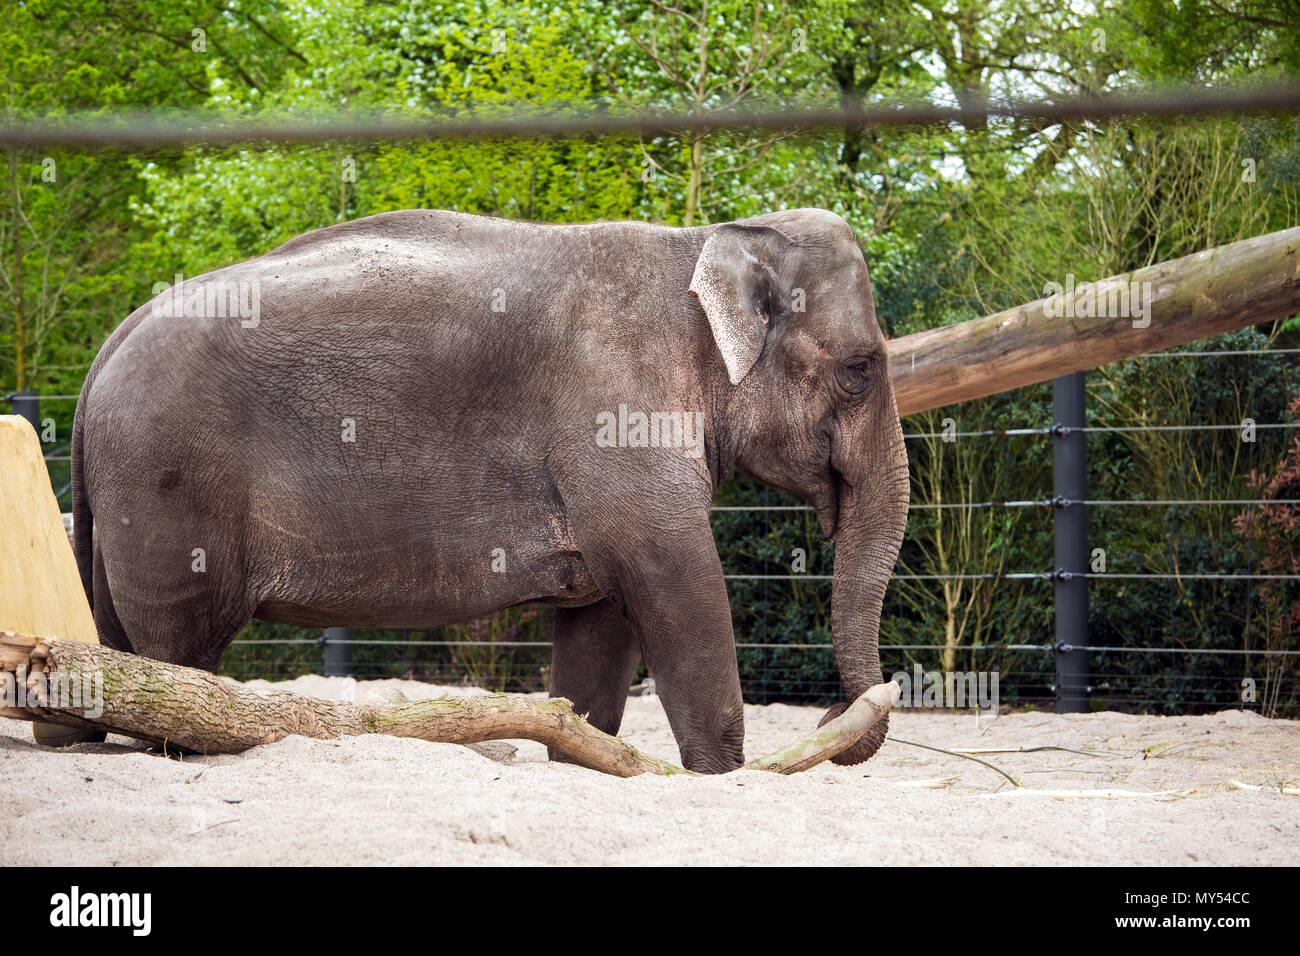 Big elephant in zoo Stock Photo